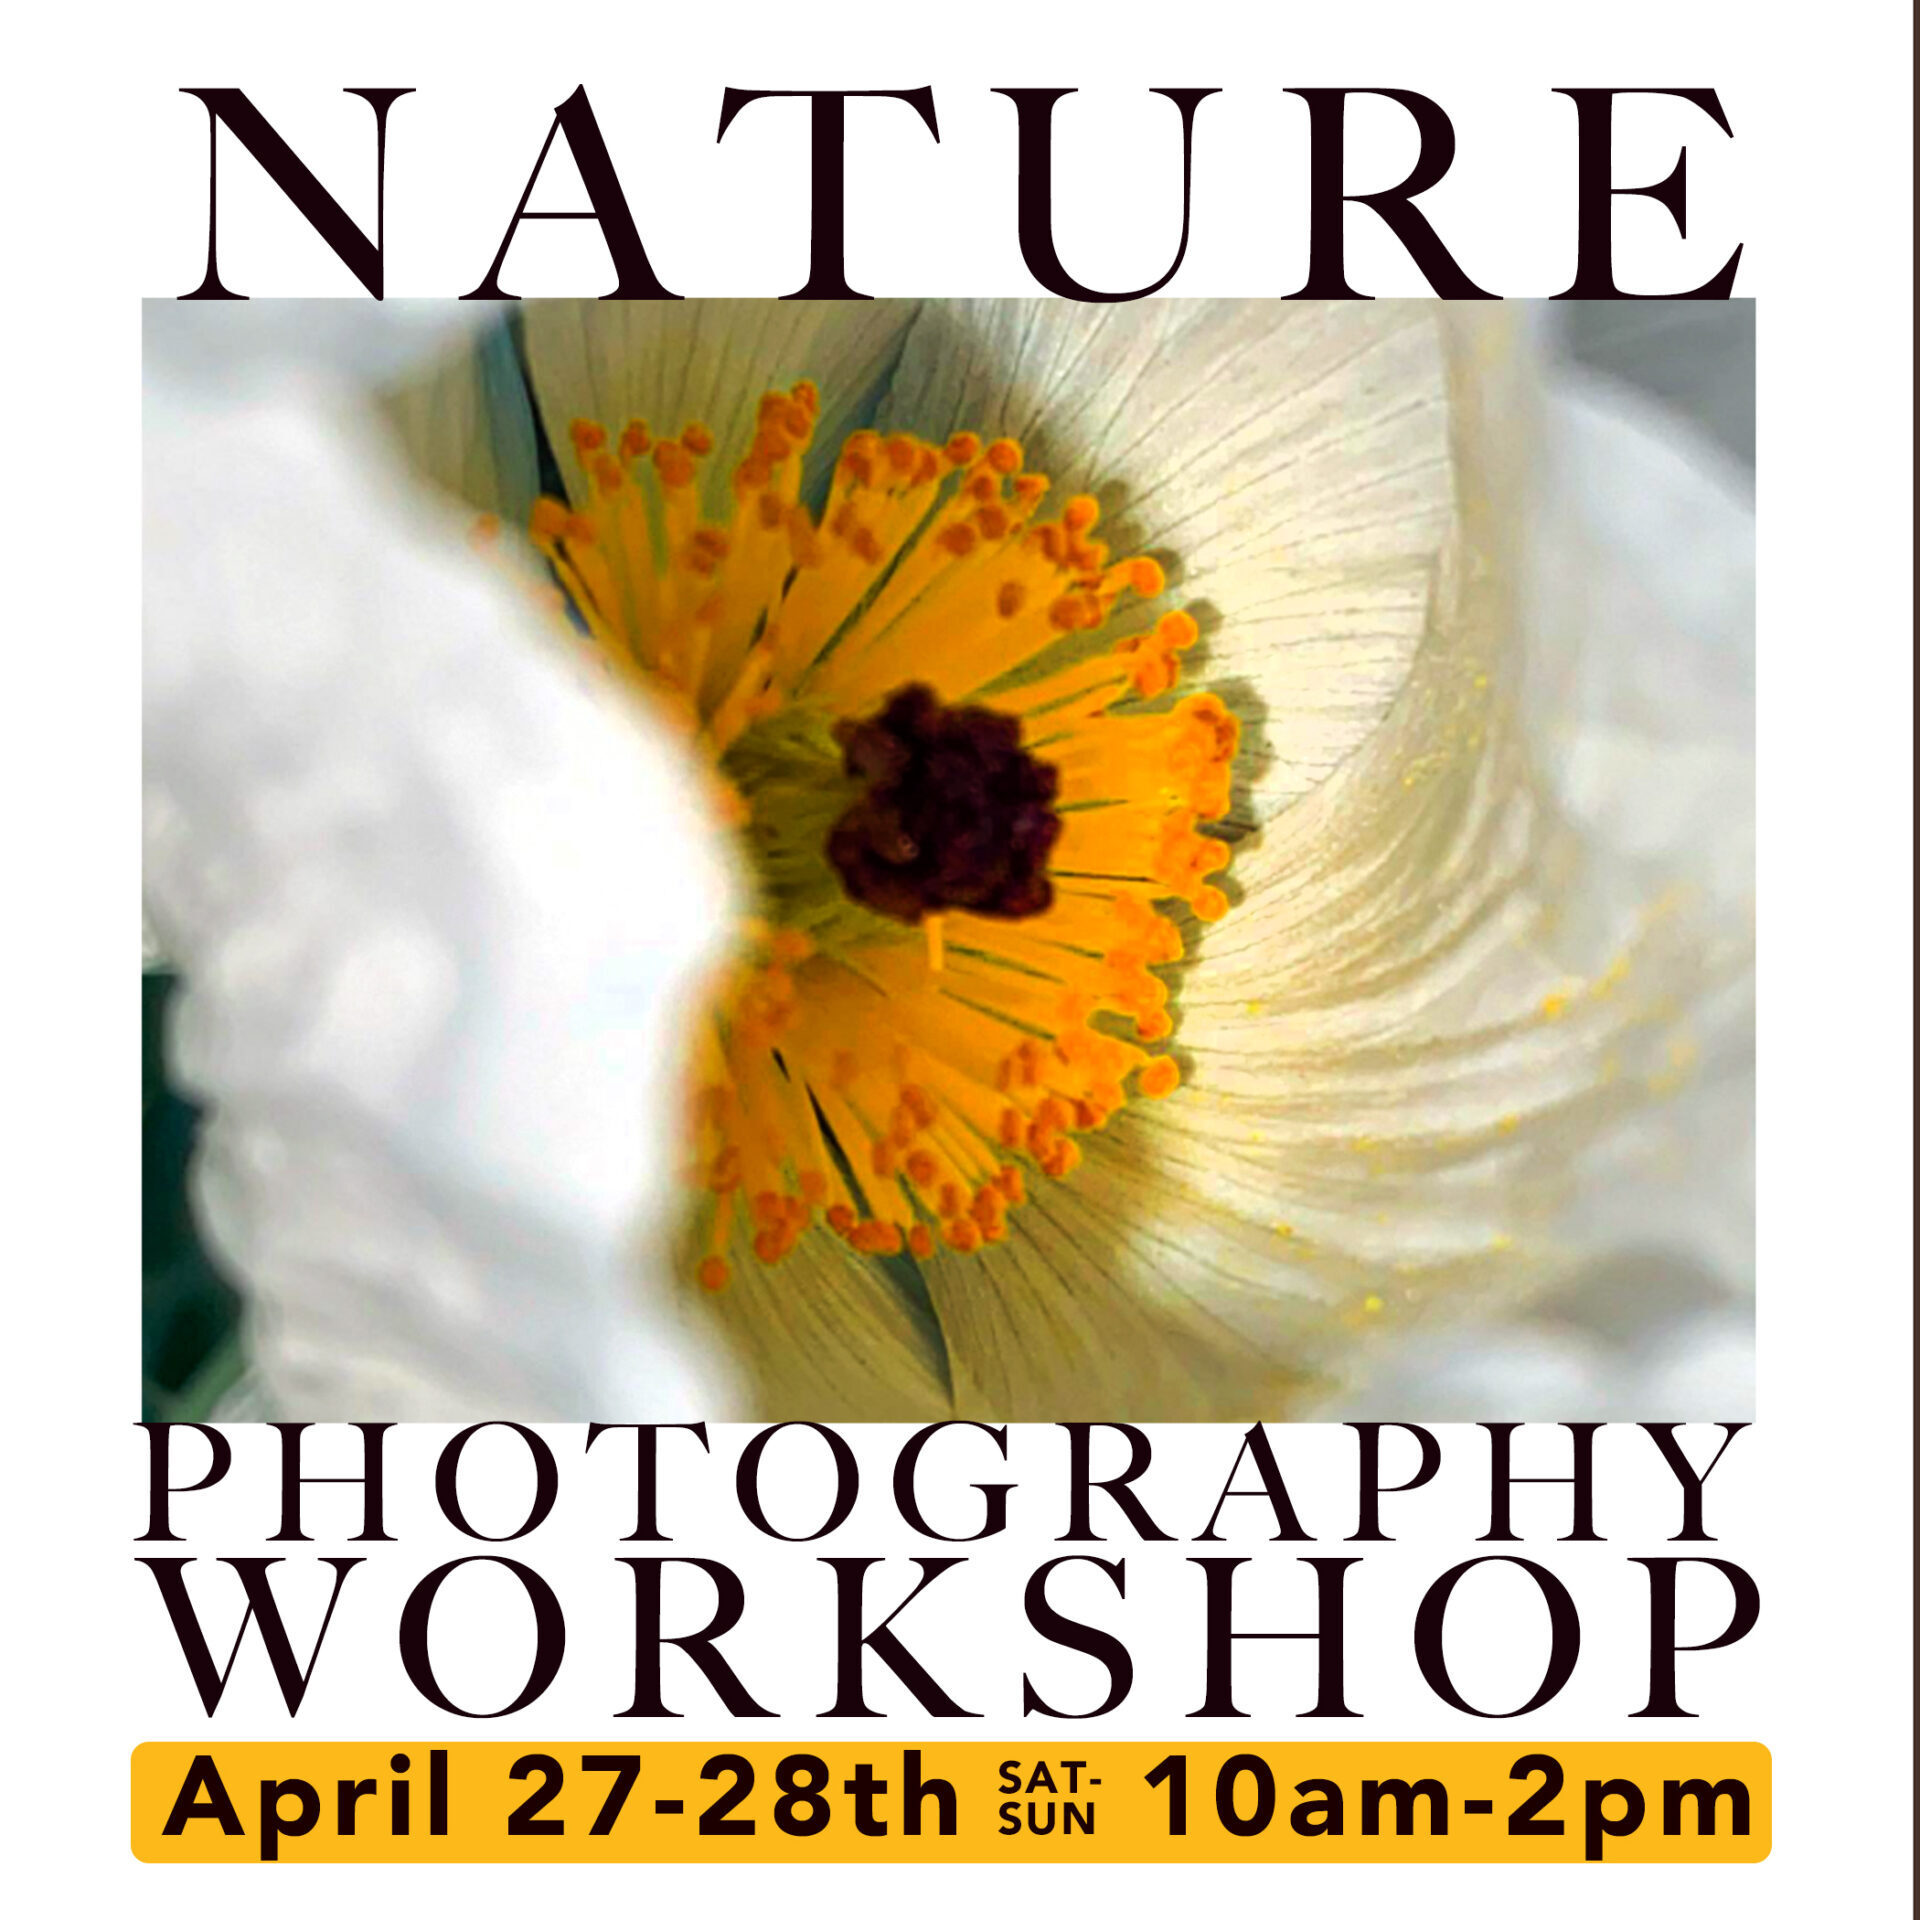 Nature Photography Workshop register here